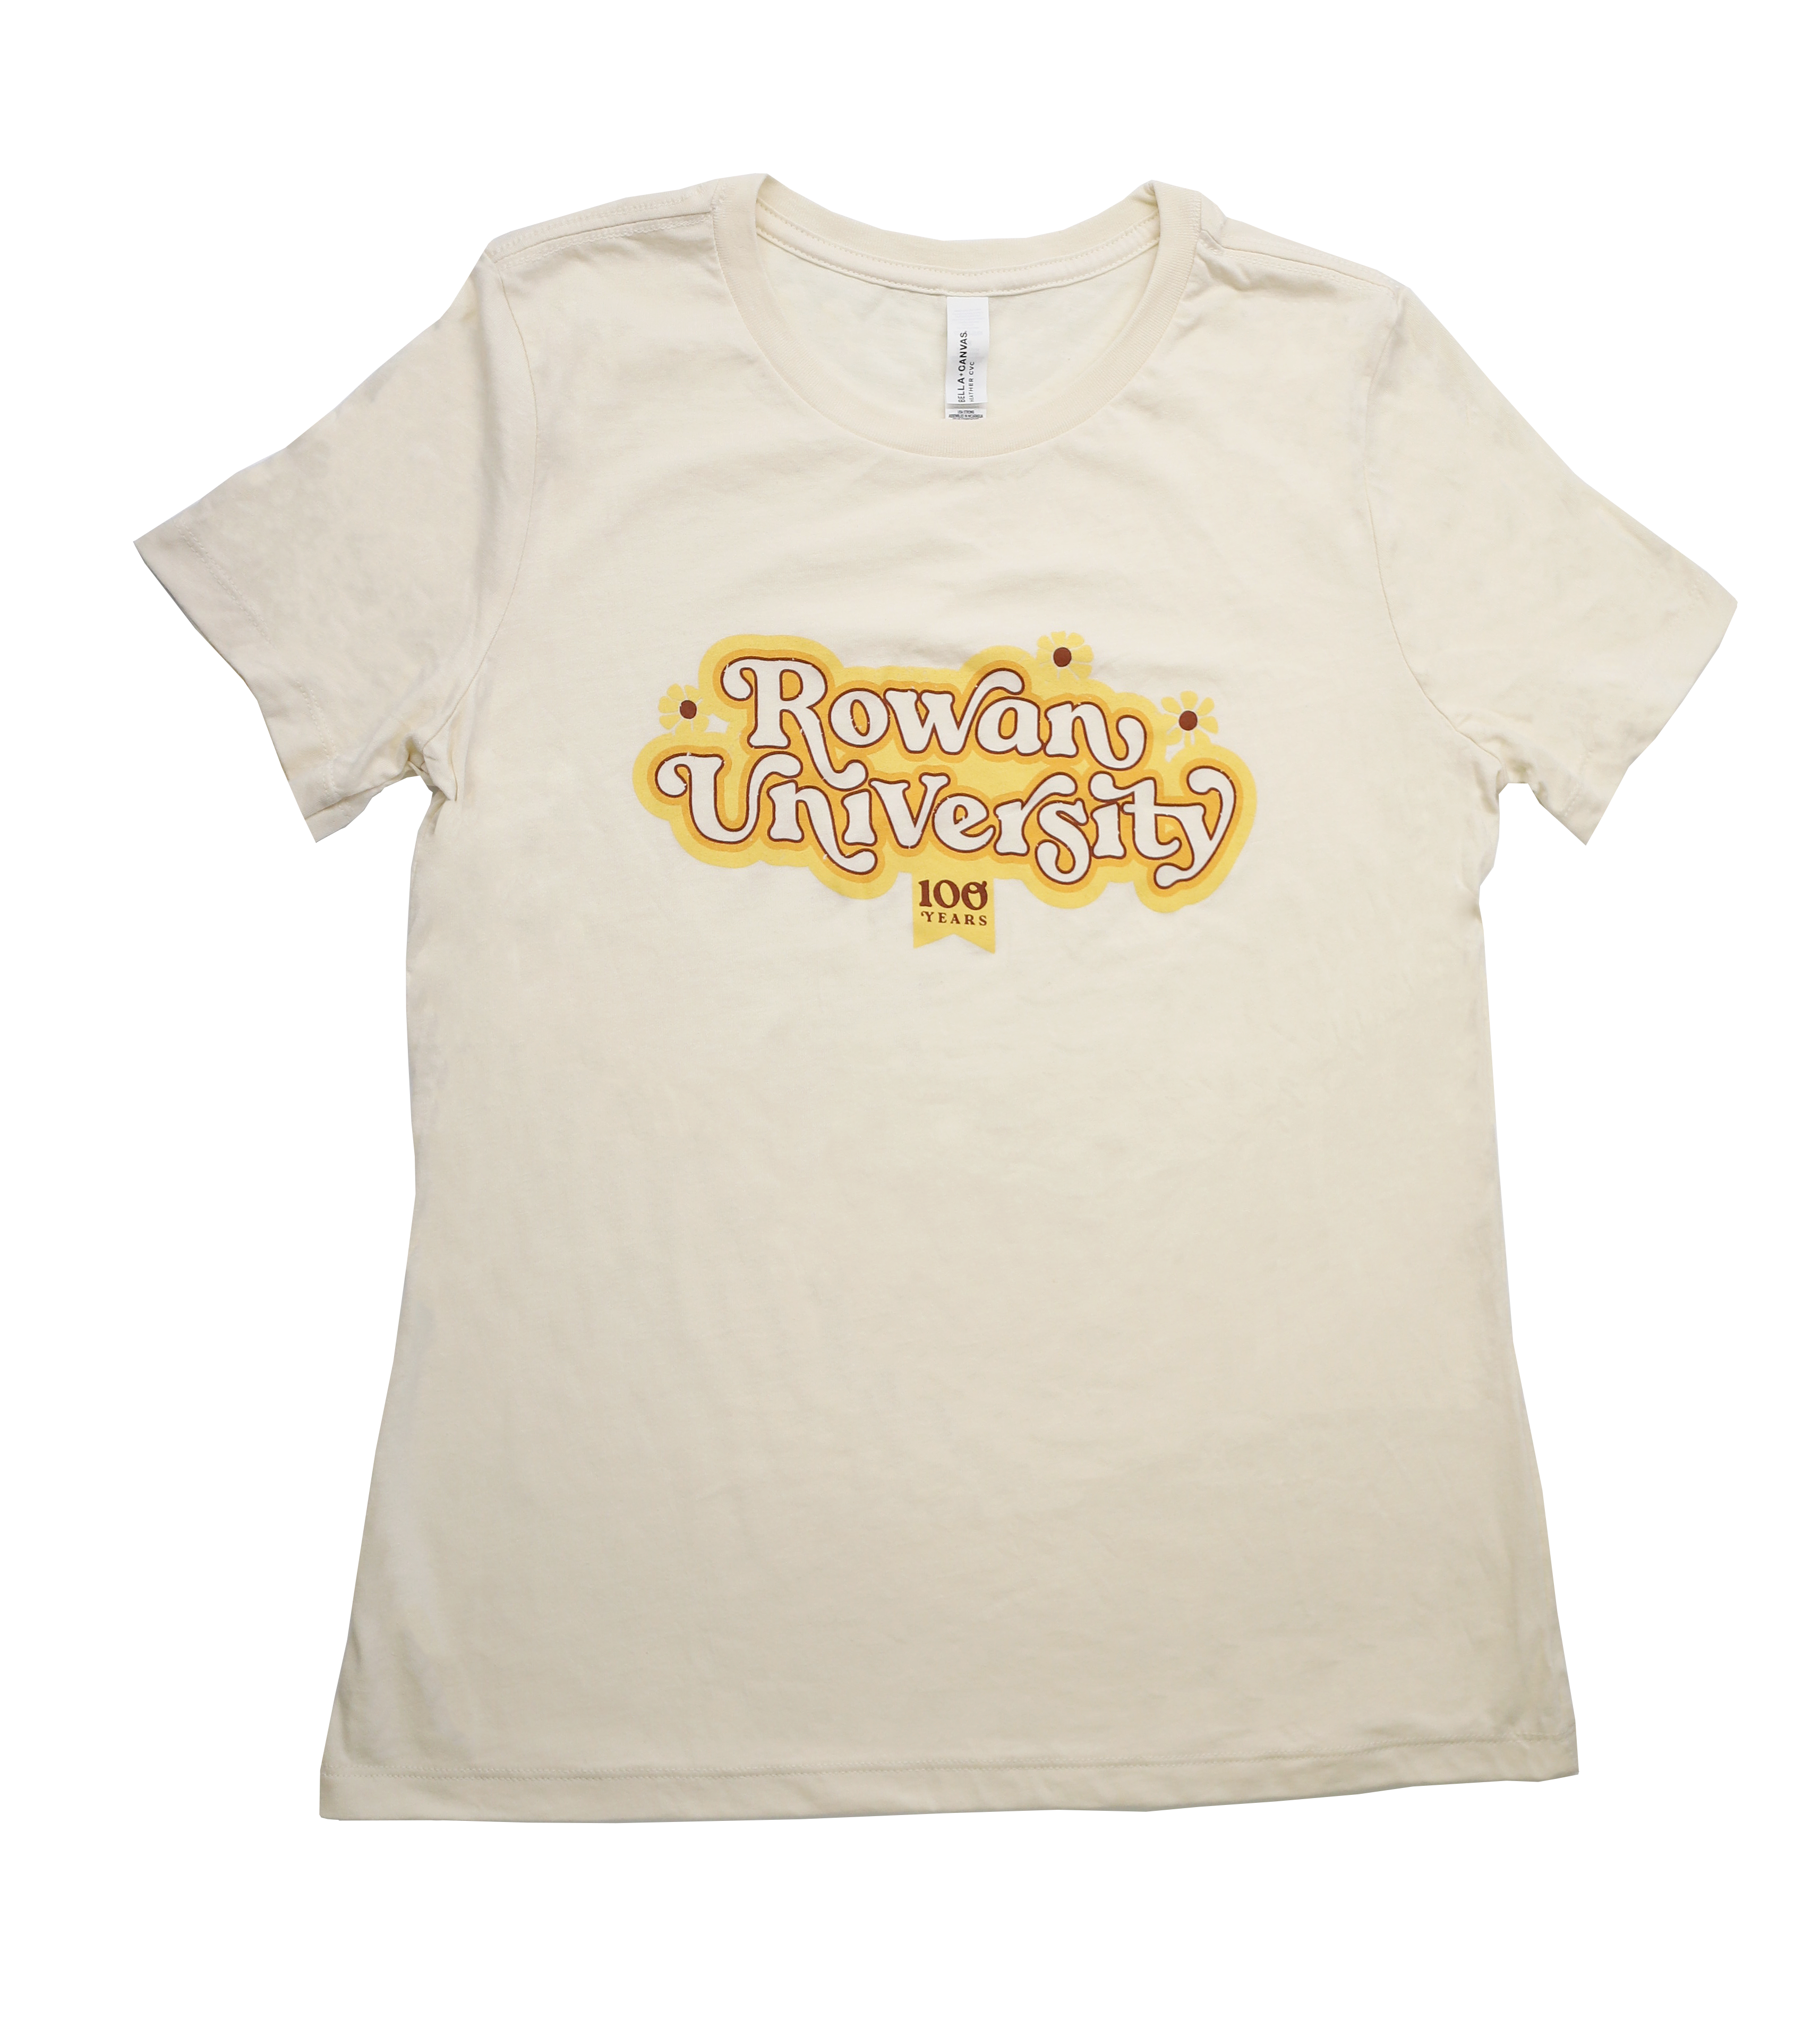 1970s-style floral design Rowan University t-shirt